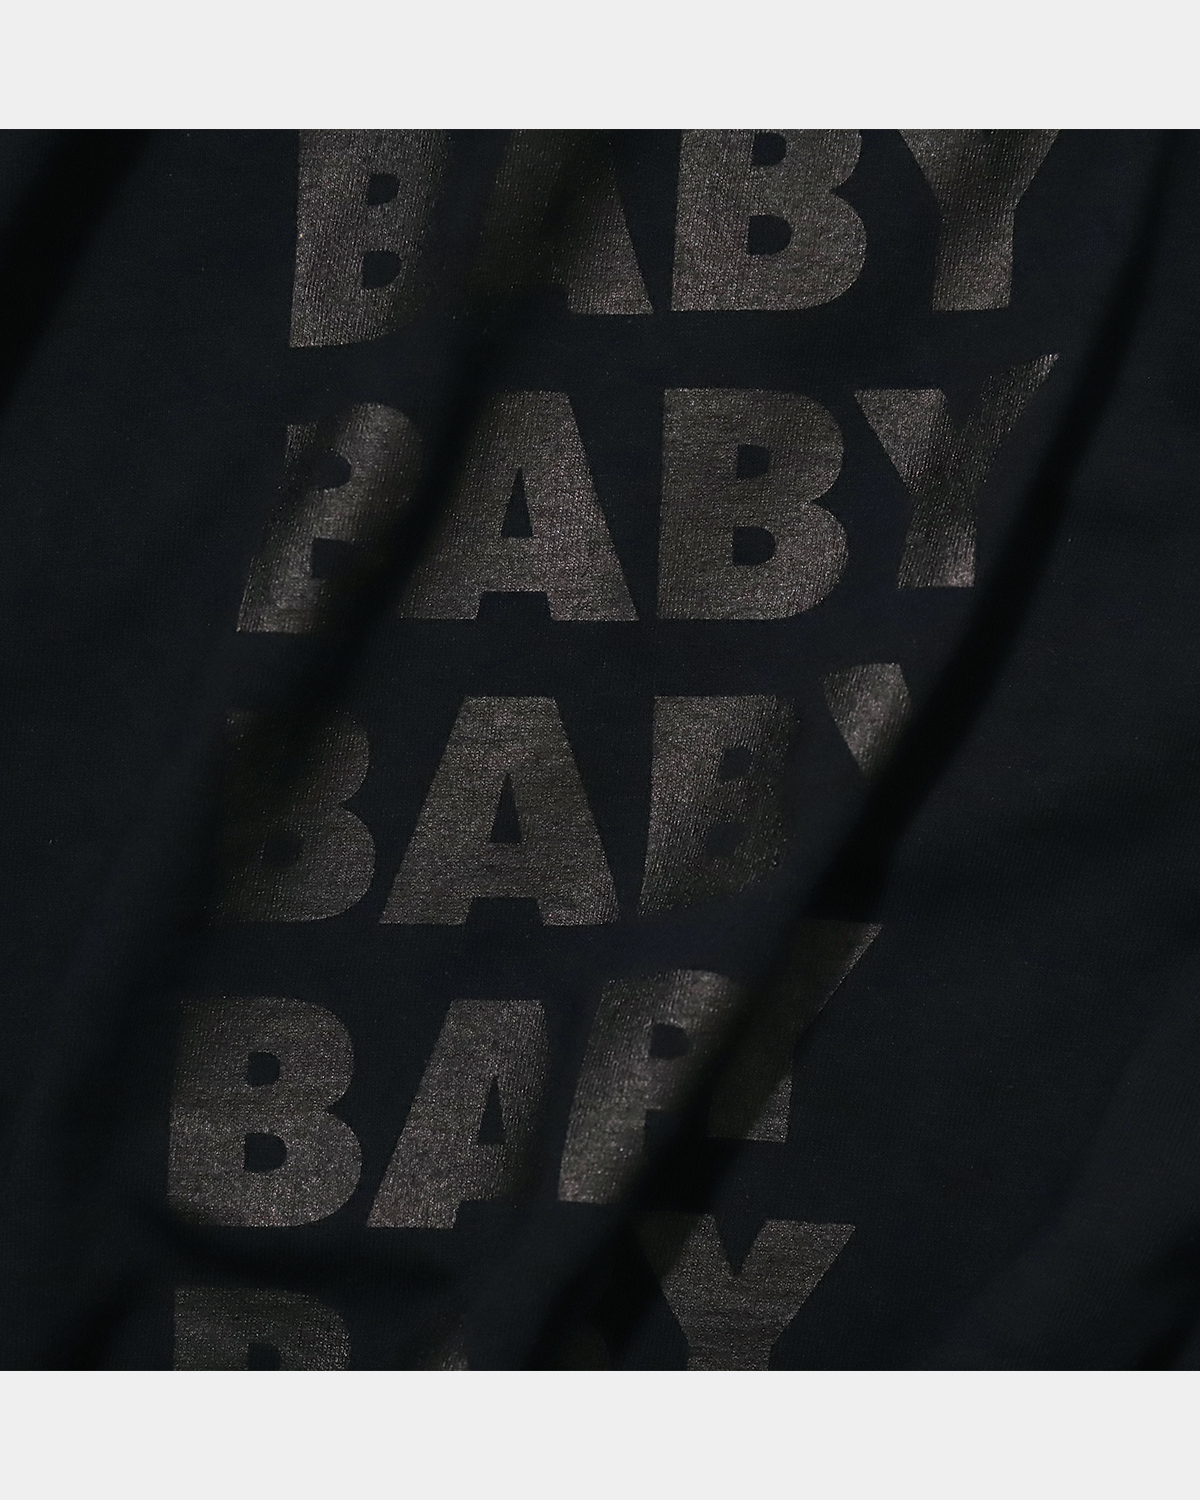 BABYBABY  Long Sleeve T-Shirt（黒ボディ×黒プリント）